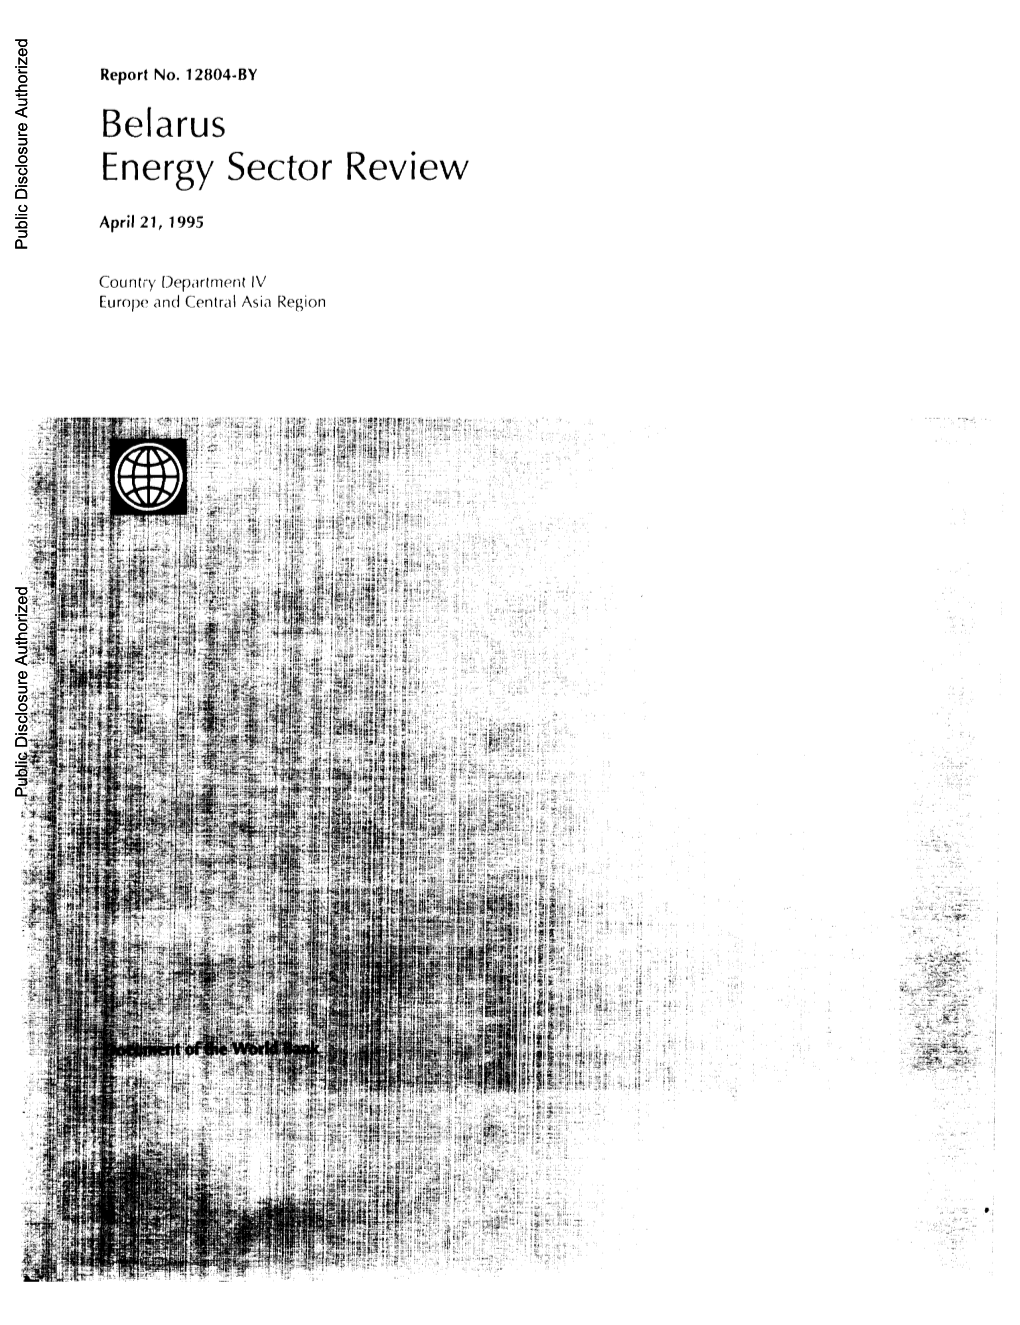 Belarus Energy Sector Review